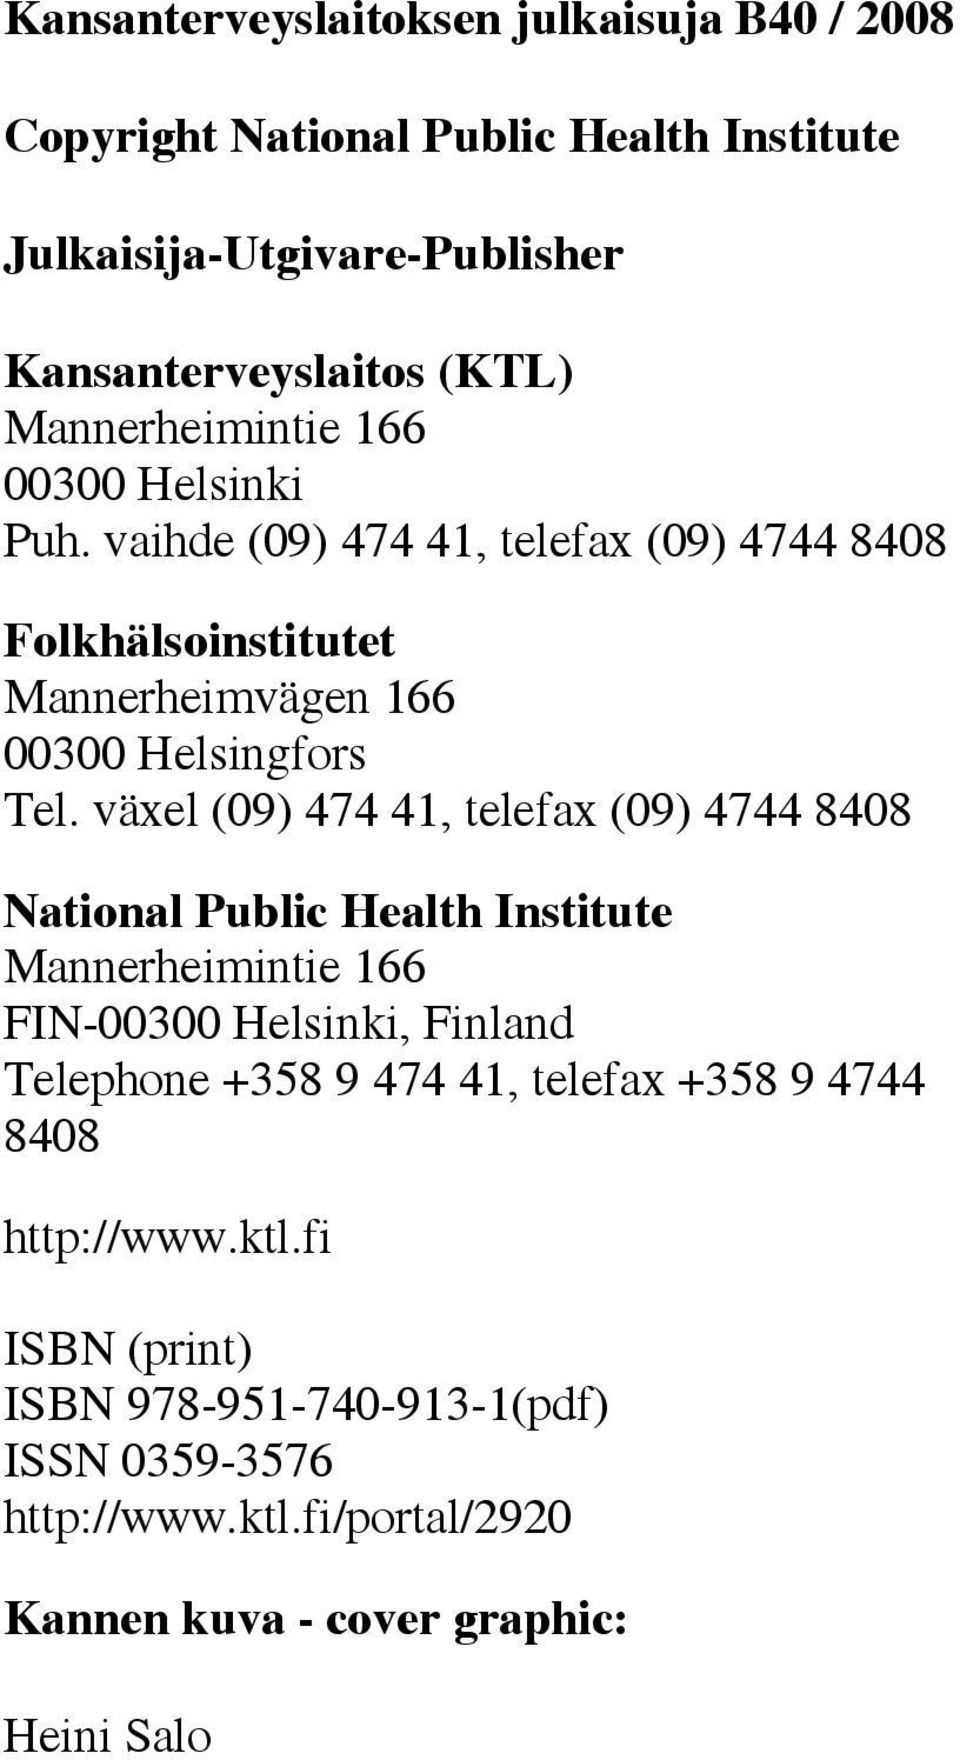 växel (09) 474 41, telefax (09) 4744 8408 National Public Health Institute Mannerheimintie 166 FIN-00300 Helsinki, Finland Telephone +358 9 474 41,